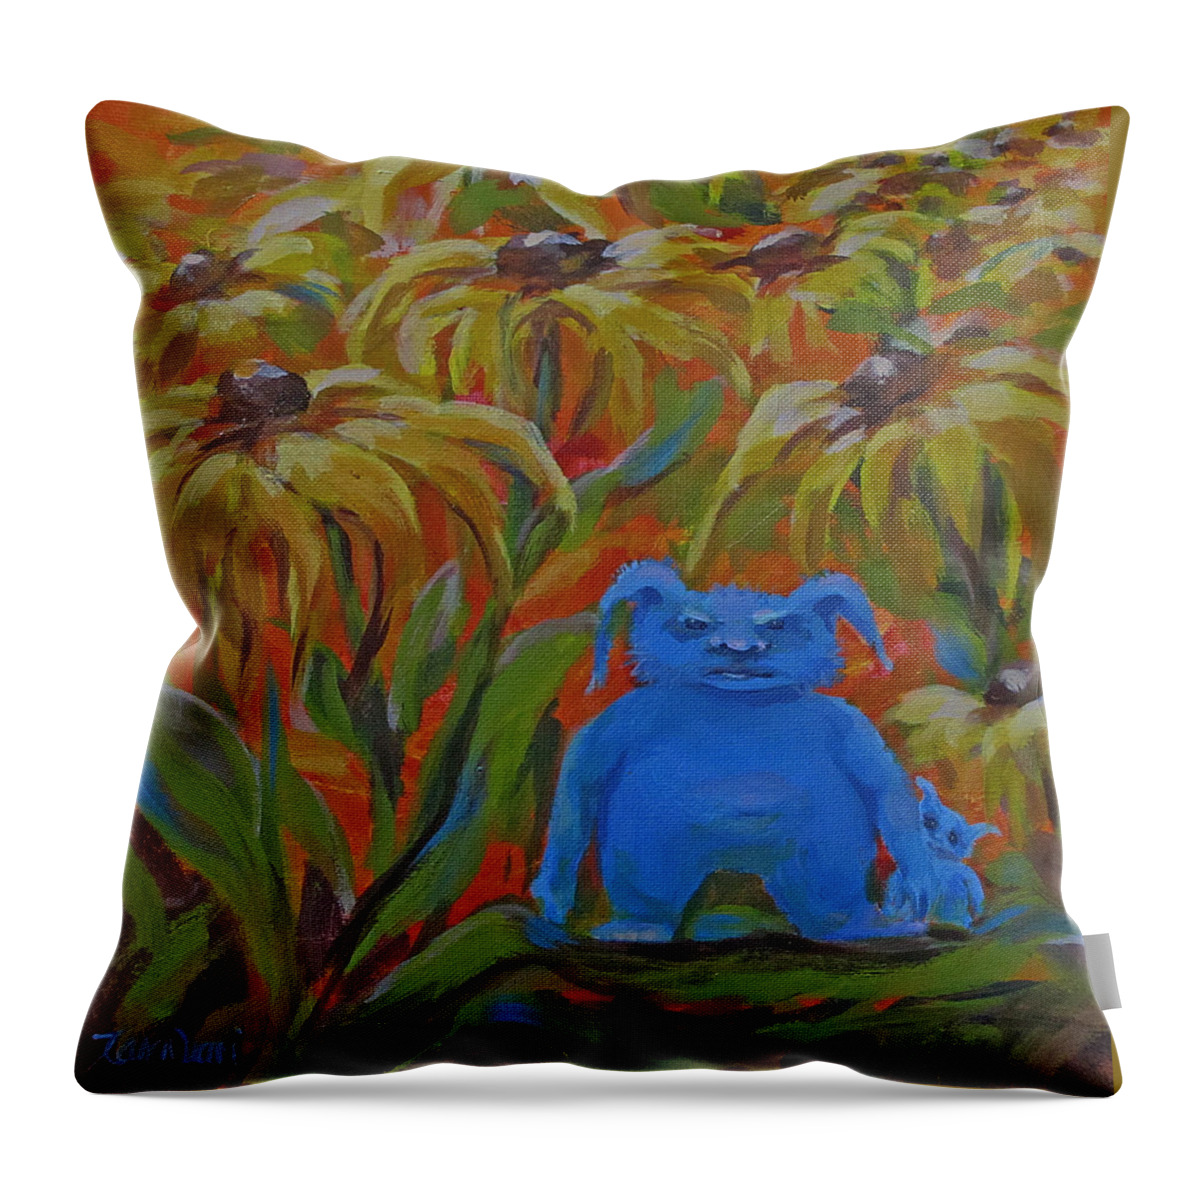 Fun Throw Pillow featuring the painting Garden Secrets by Karen Ilari